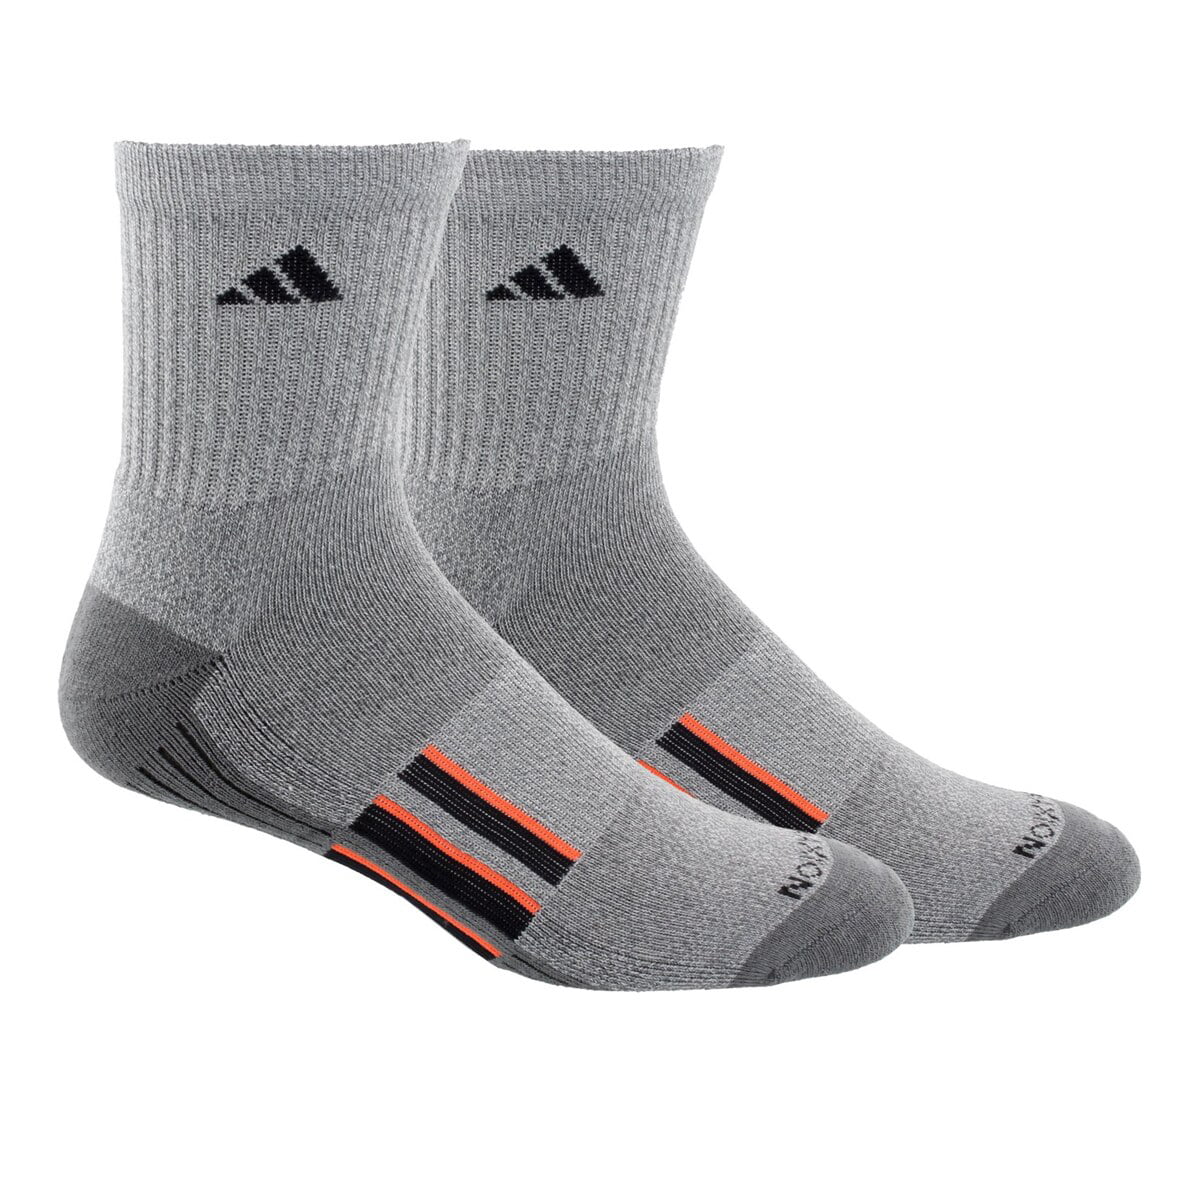 Adidas Men's Cushioned Mid Crew Socks 2 Pack Gray Size 6-12 - Walmart.com